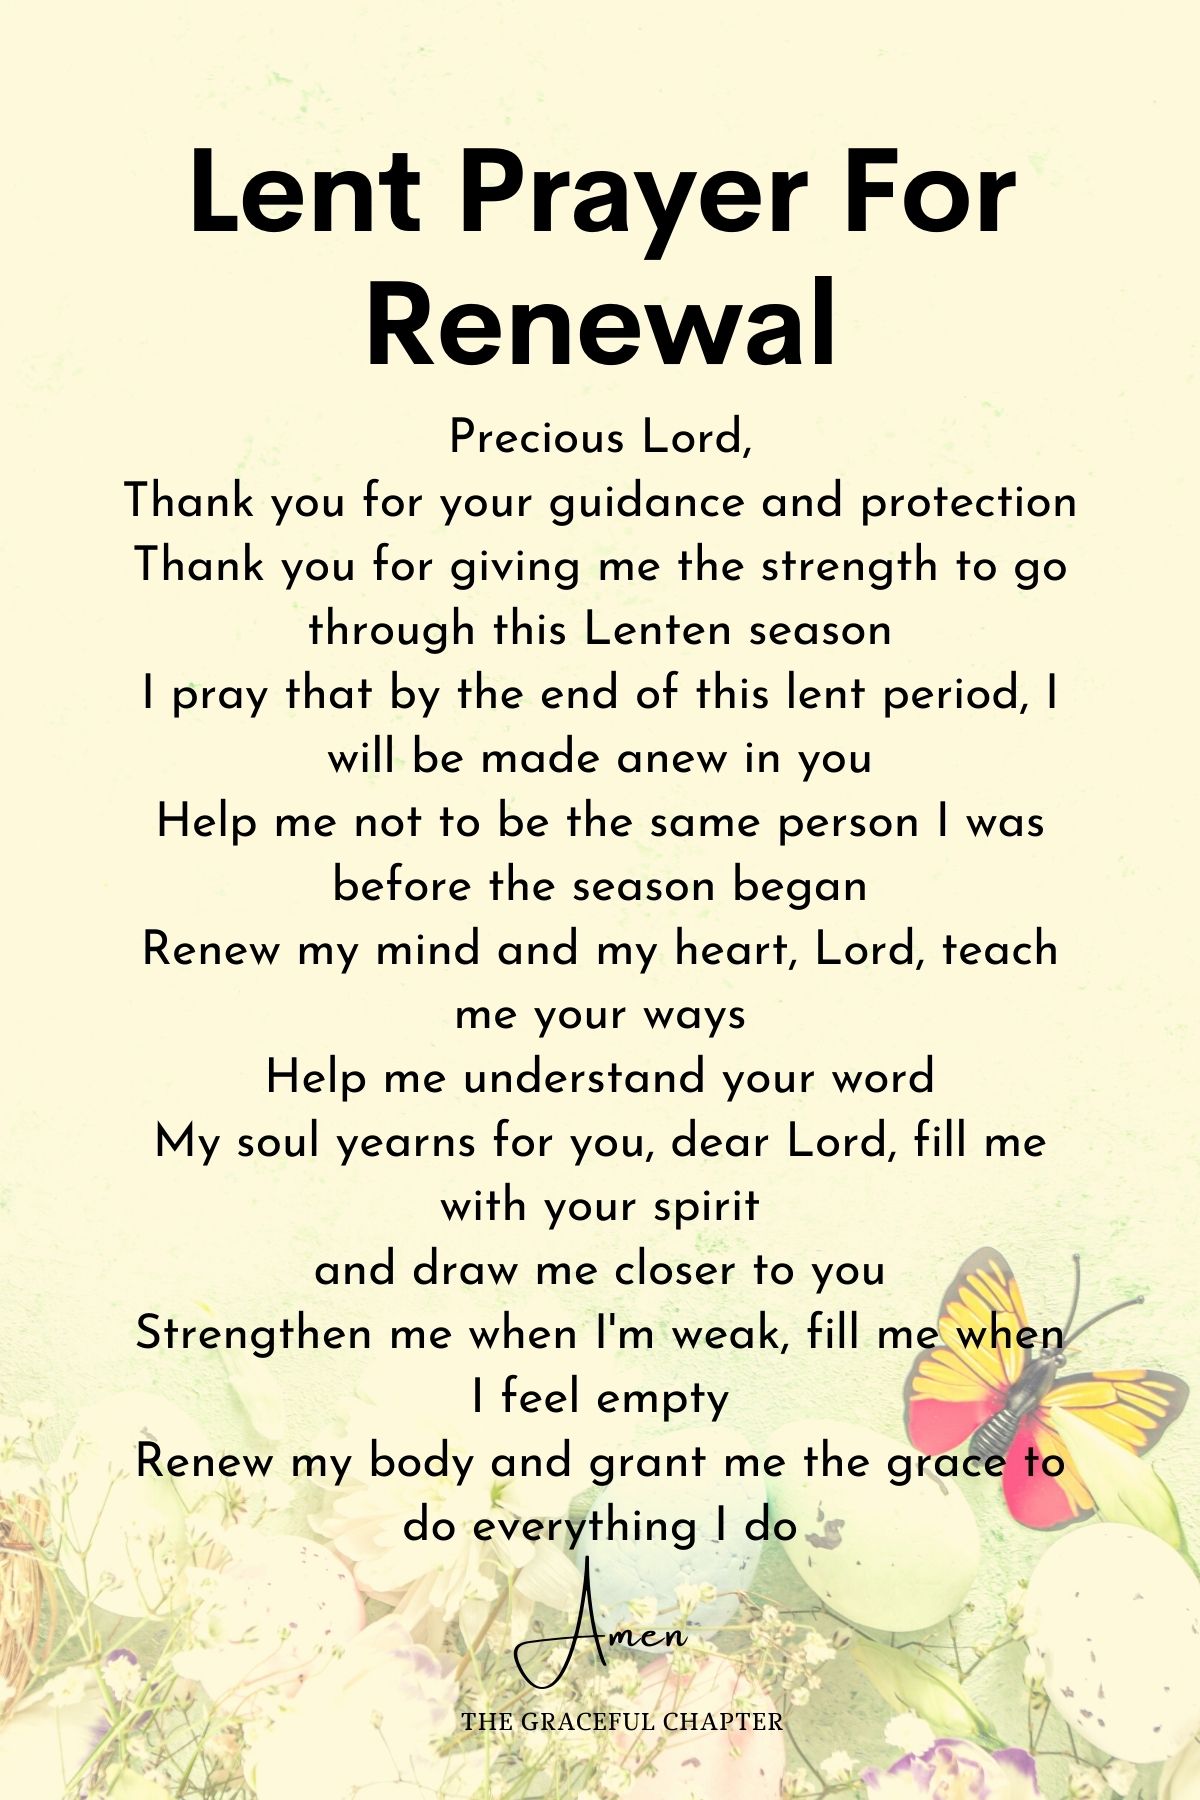 Lent prayer for renewal